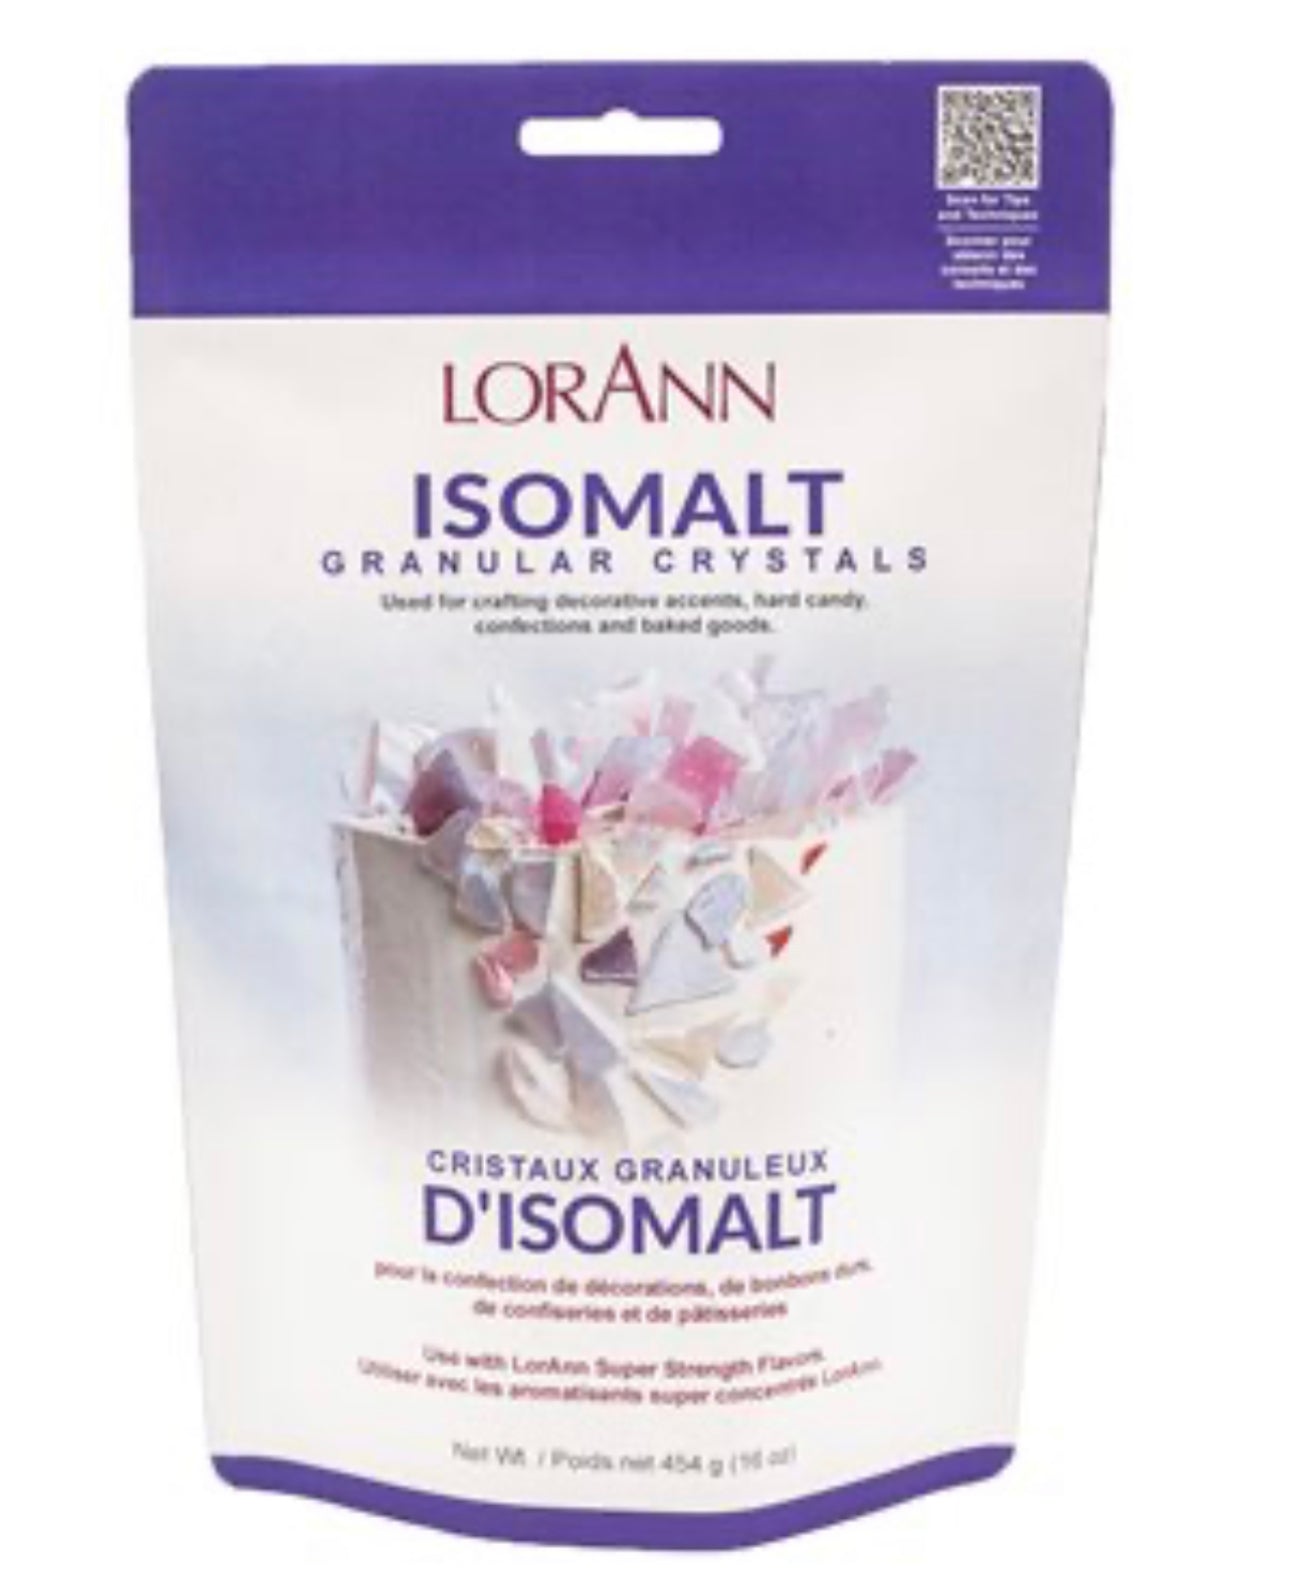 Isomalt (Sustituto de azúcar) 3.53 oz – Ma Baker and Chef USA